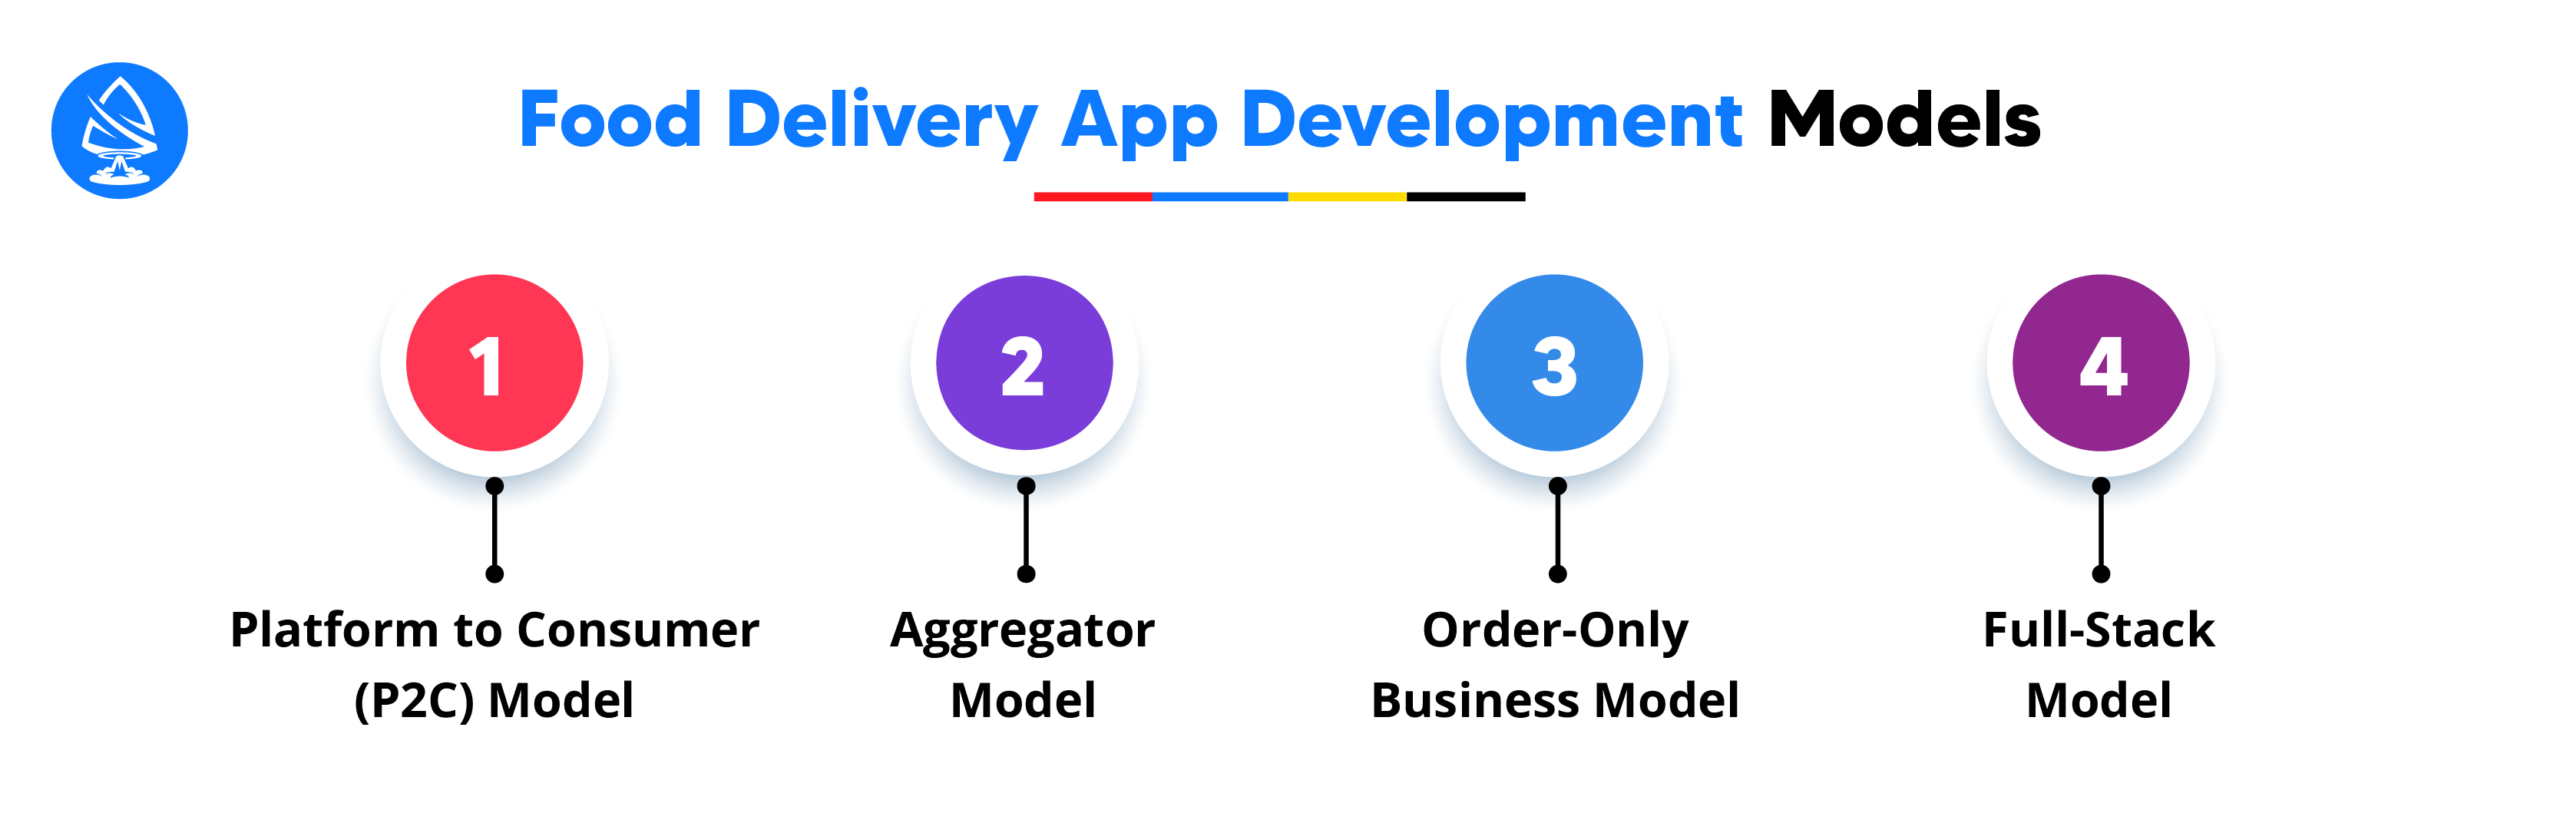 Food Delivery App Development Models